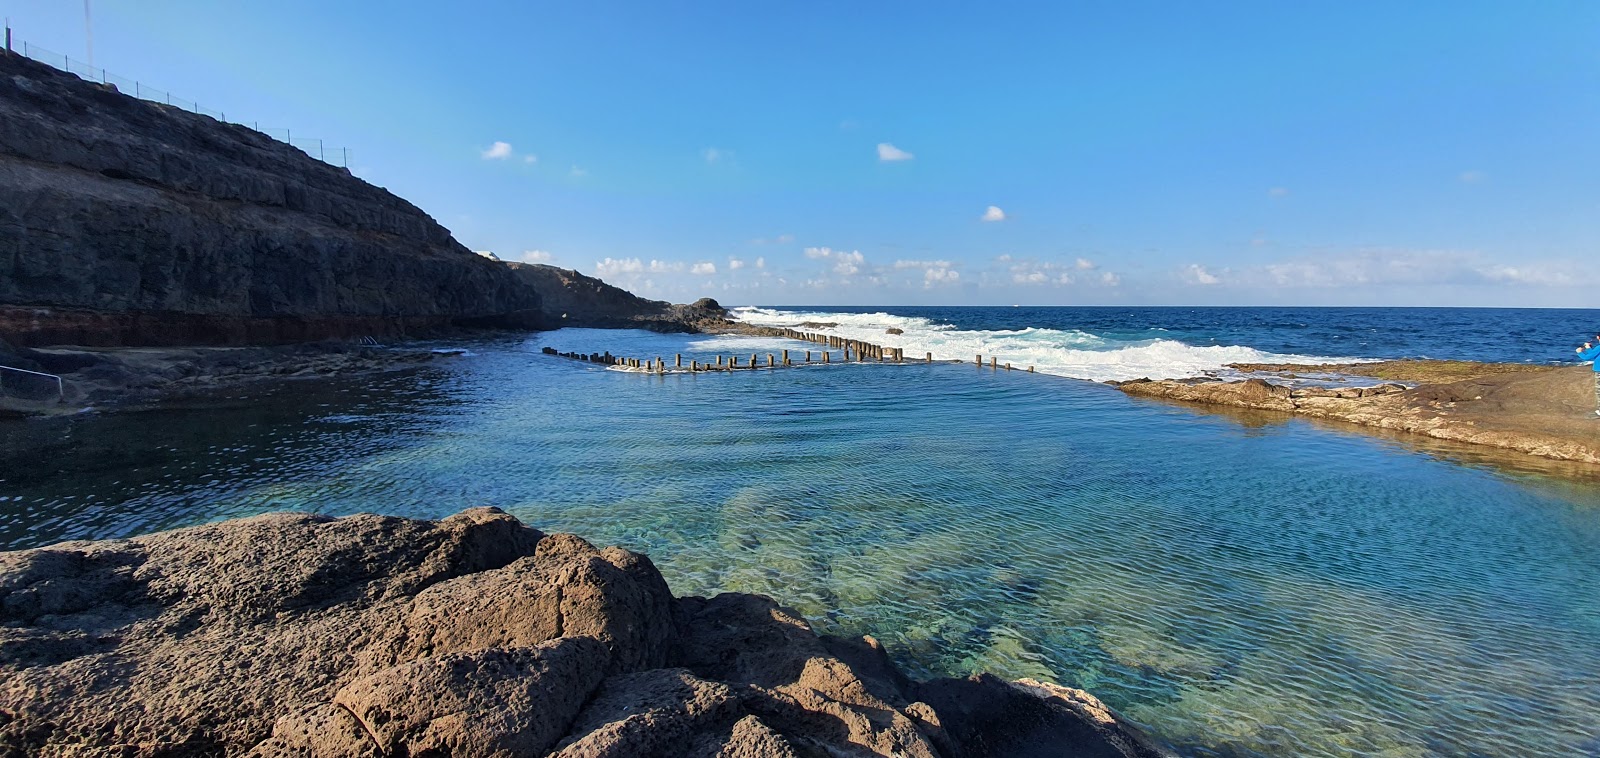 Roque prieto pools'in fotoğrafı mavi saf su yüzey ile